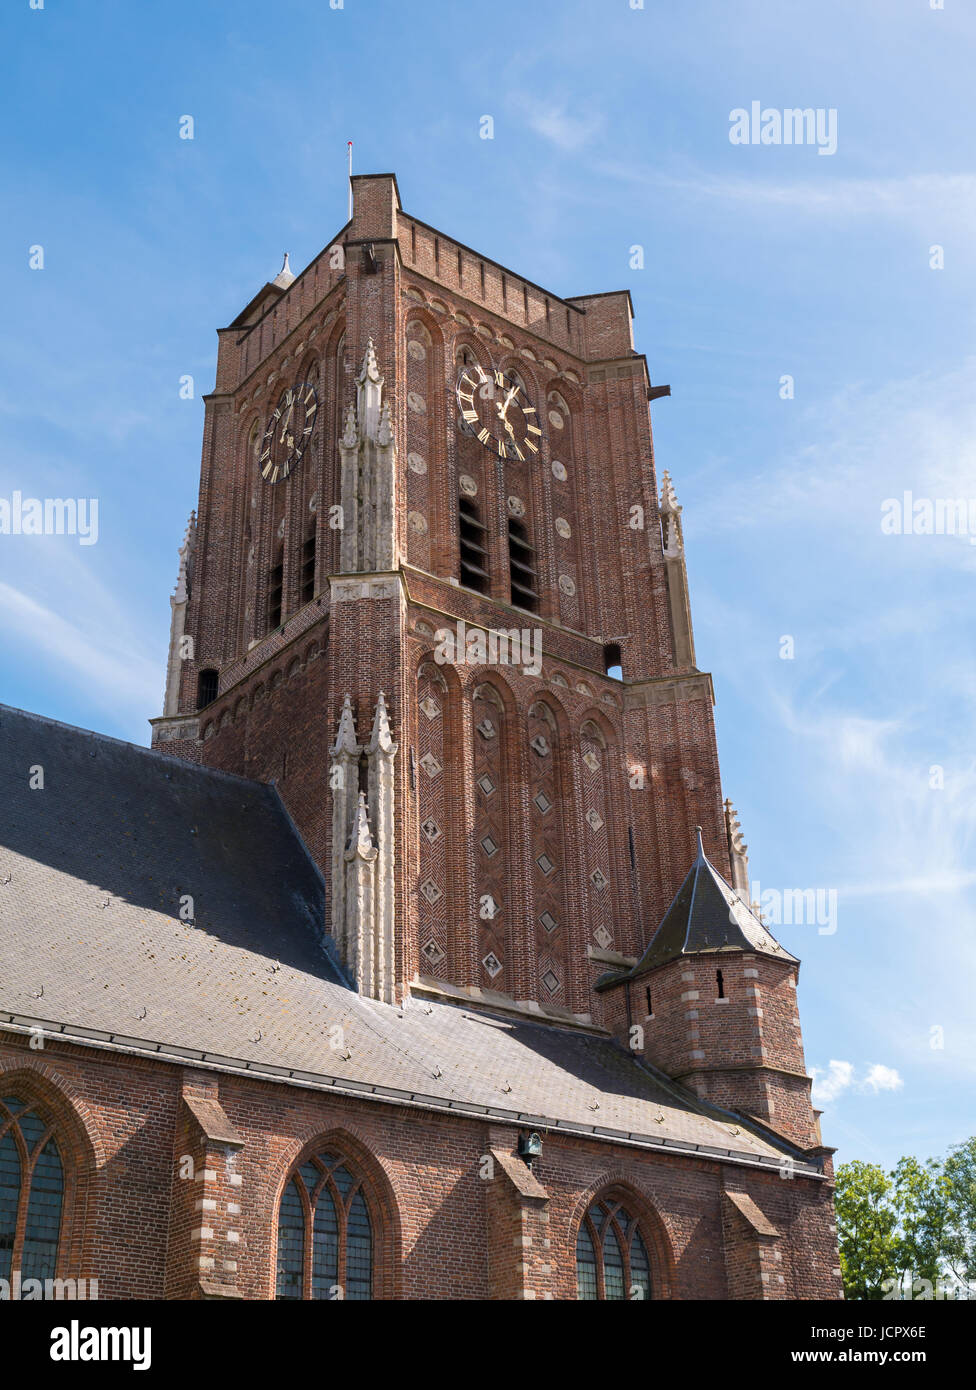 Plaza de la torre de la iglesia de Saint Martin Mosterdpot's Church en la antigua ciudad fortificada de Woudrichem, Brabant, Holanda Foto de stock